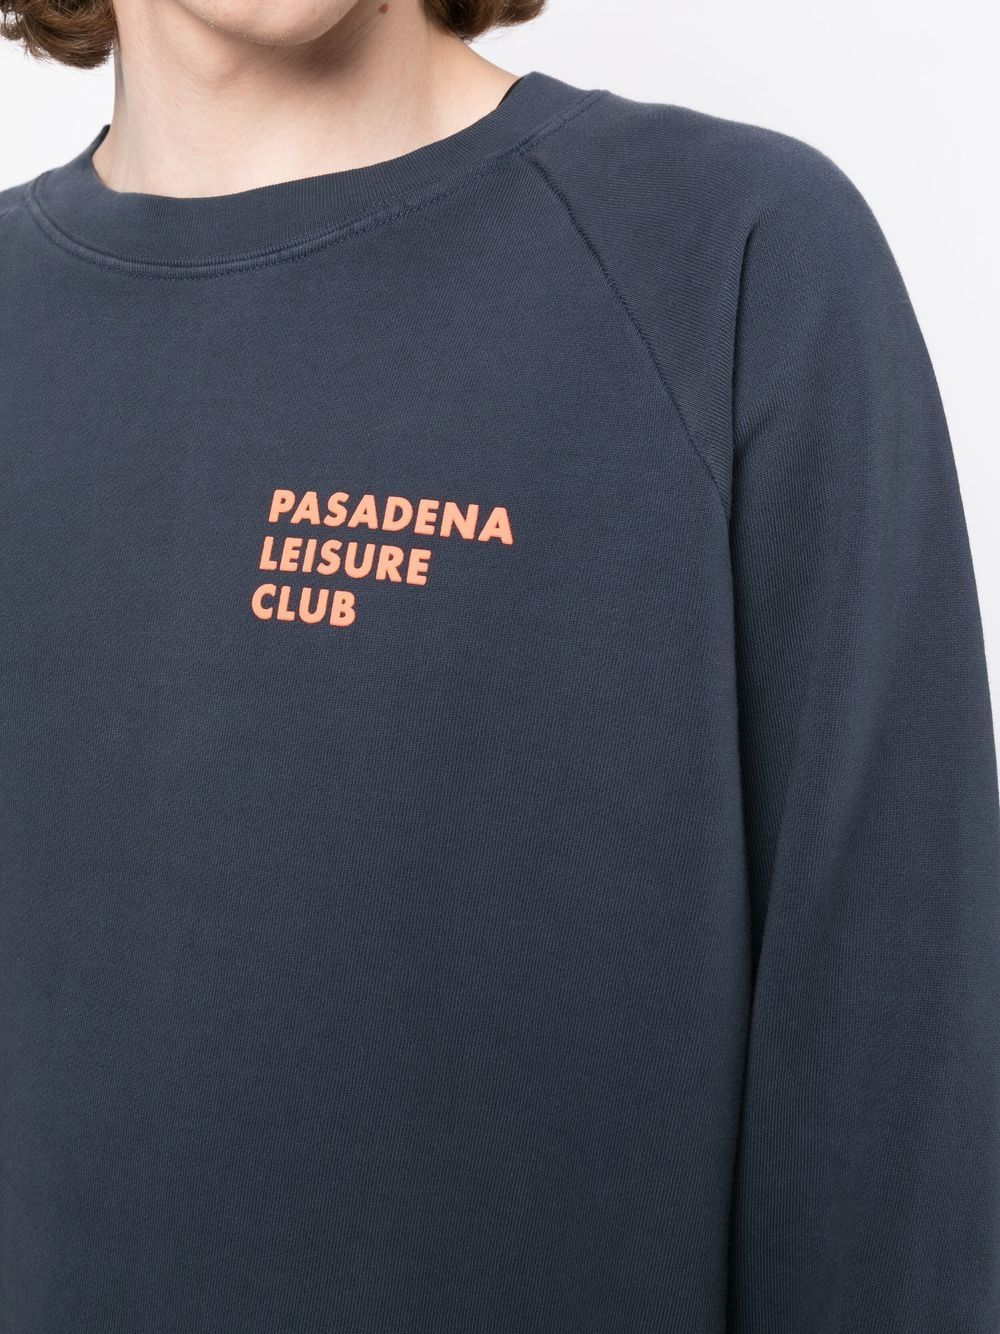 Pasadena Leisure Club ロゴ スウェットシャツ - Farfetch